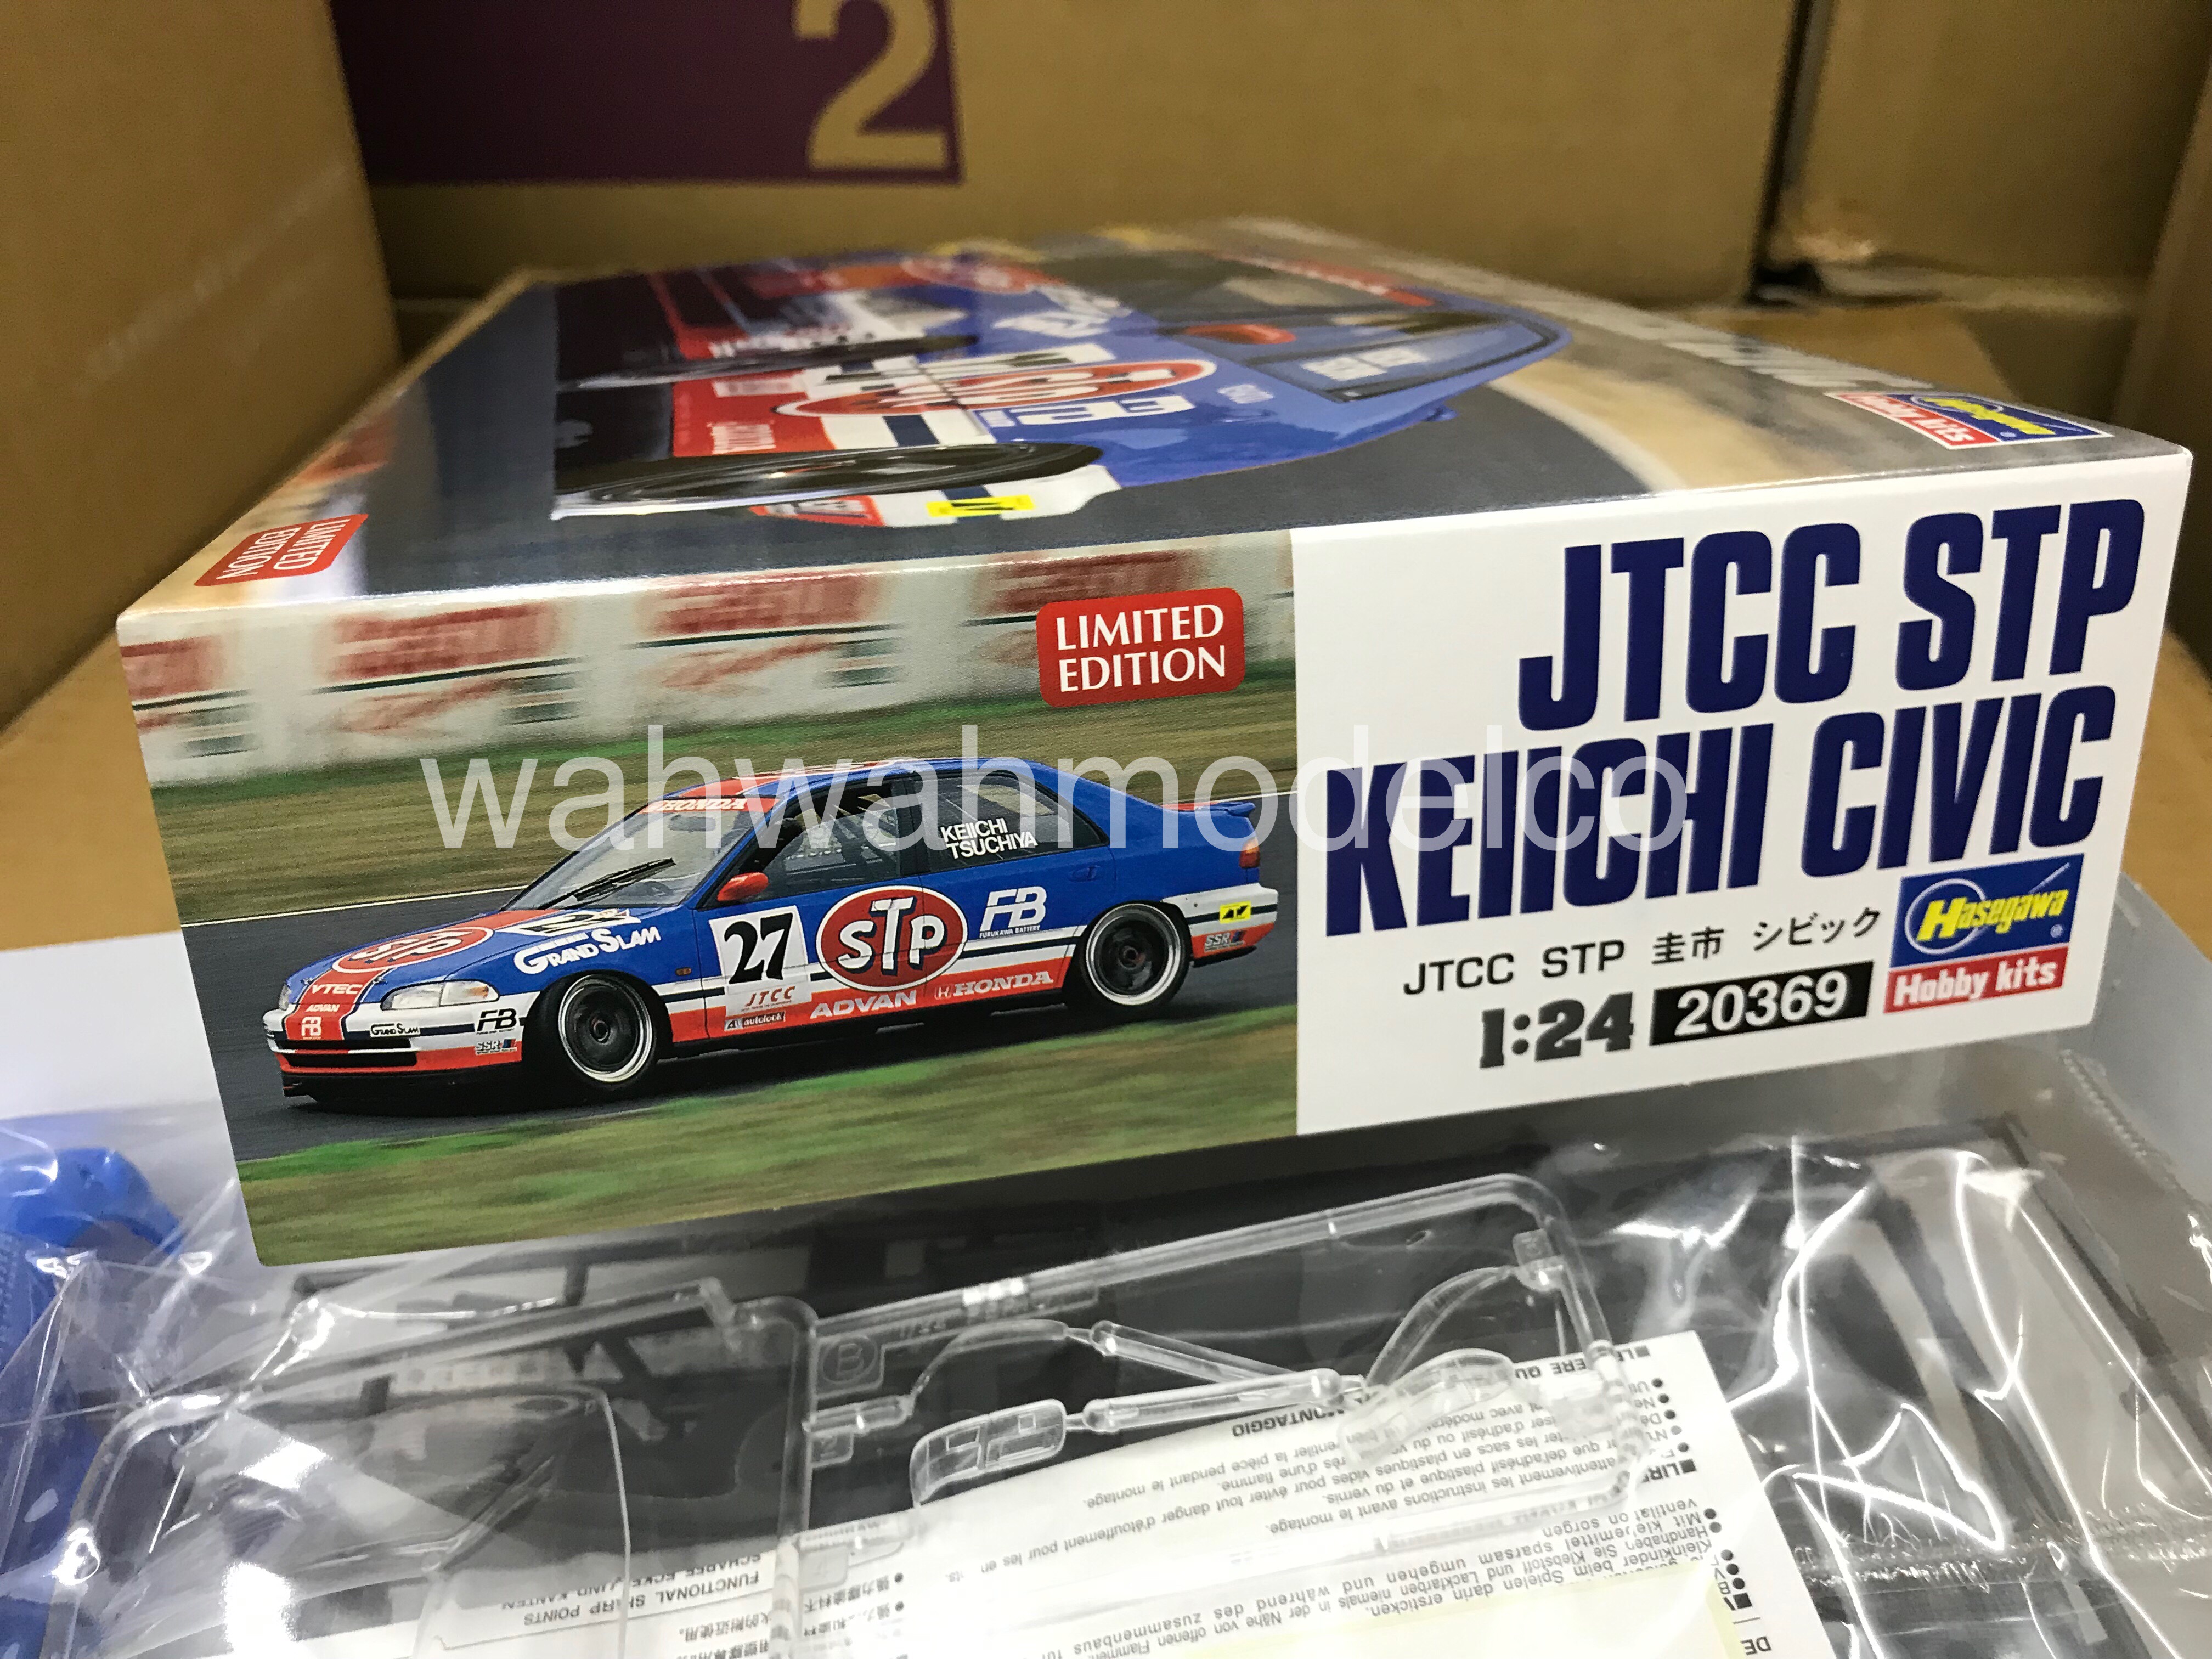 Hasegawa 20369 1/24 JTCC STP Keiichi Civic Model Car Kit